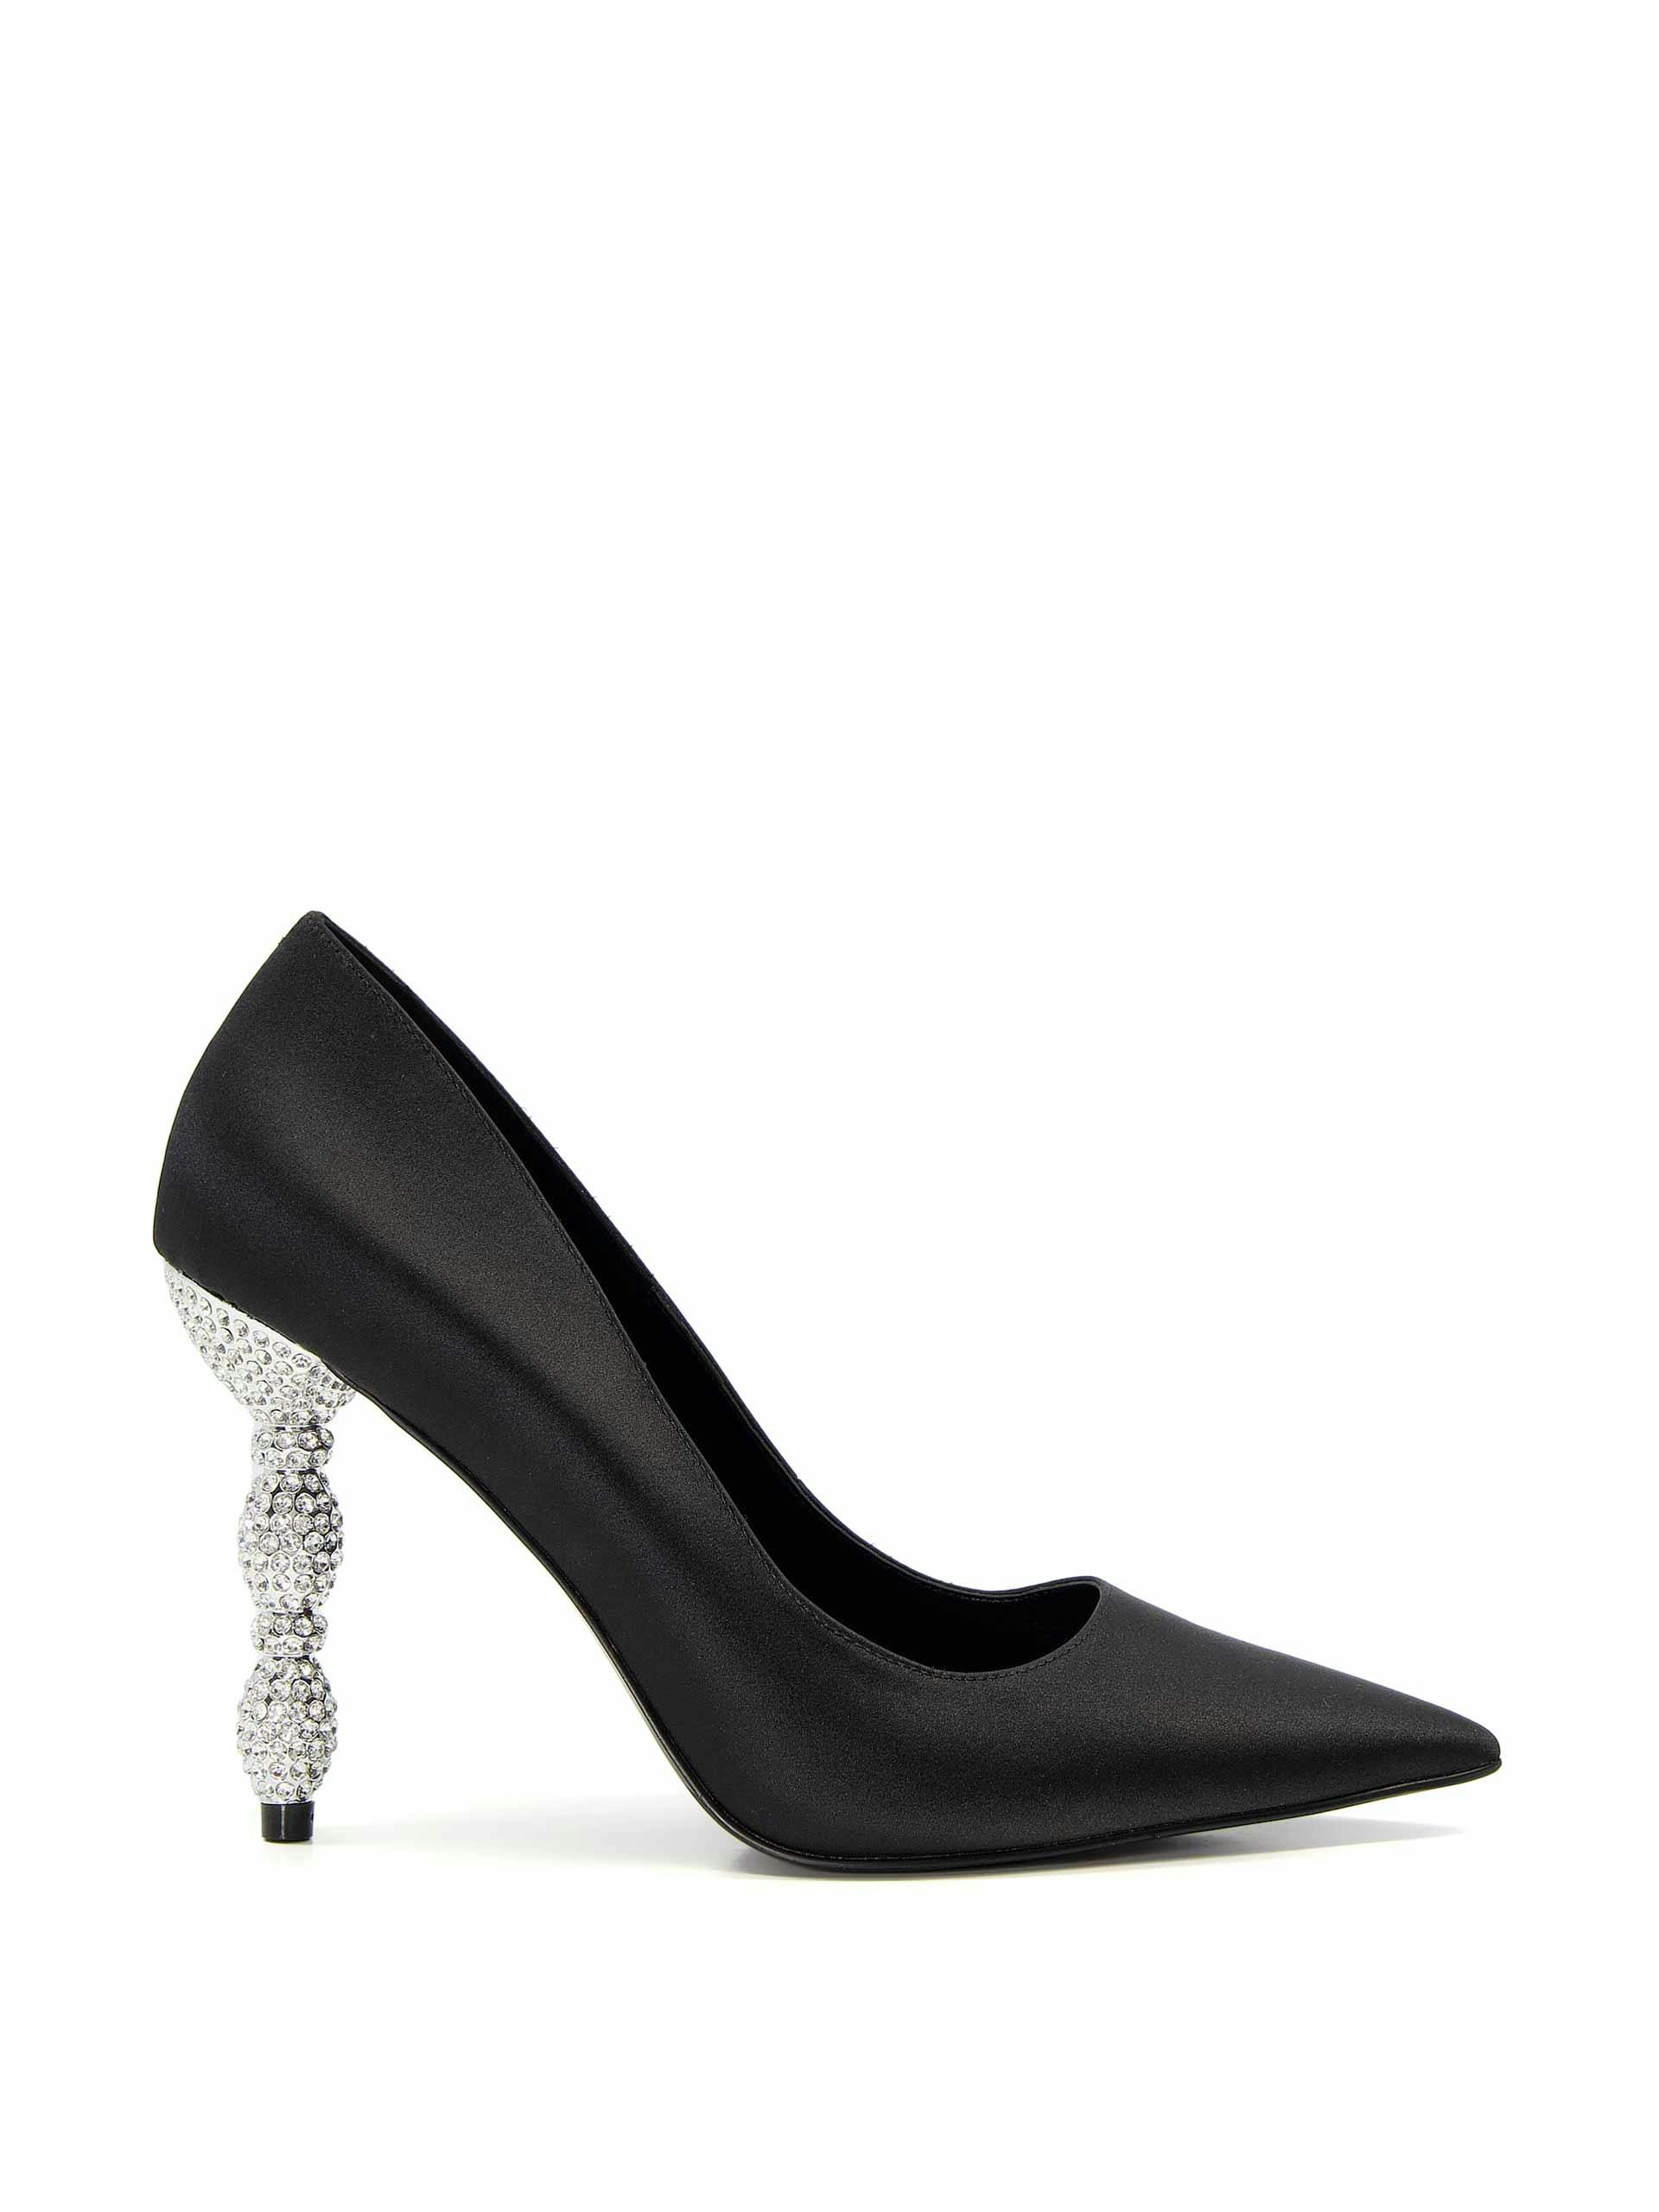 Black heels with crystal embellishment